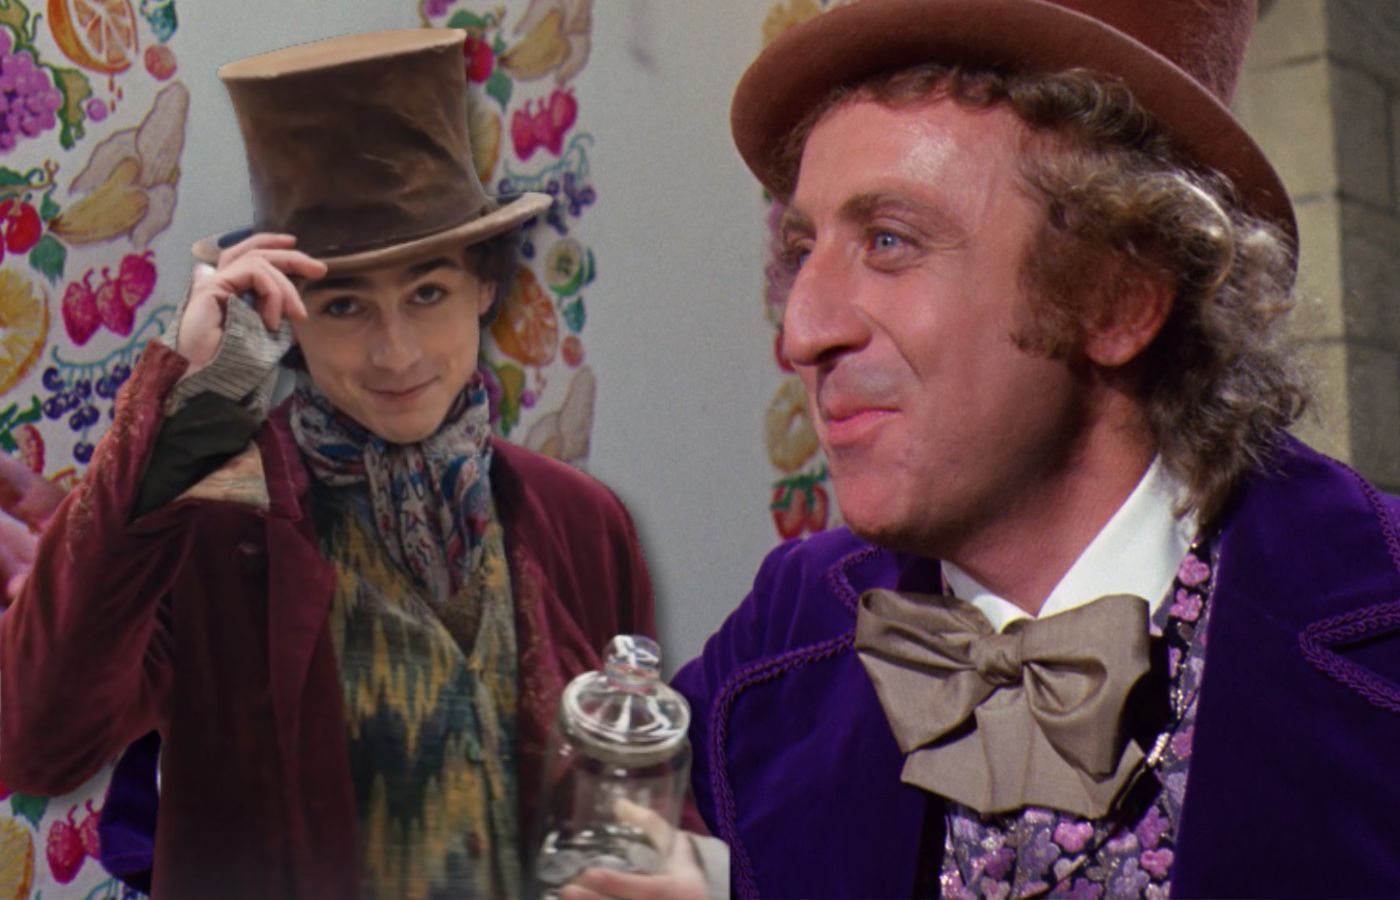 Wonka Movie: The Prequel Origin Story To THAT Chocolate Factory